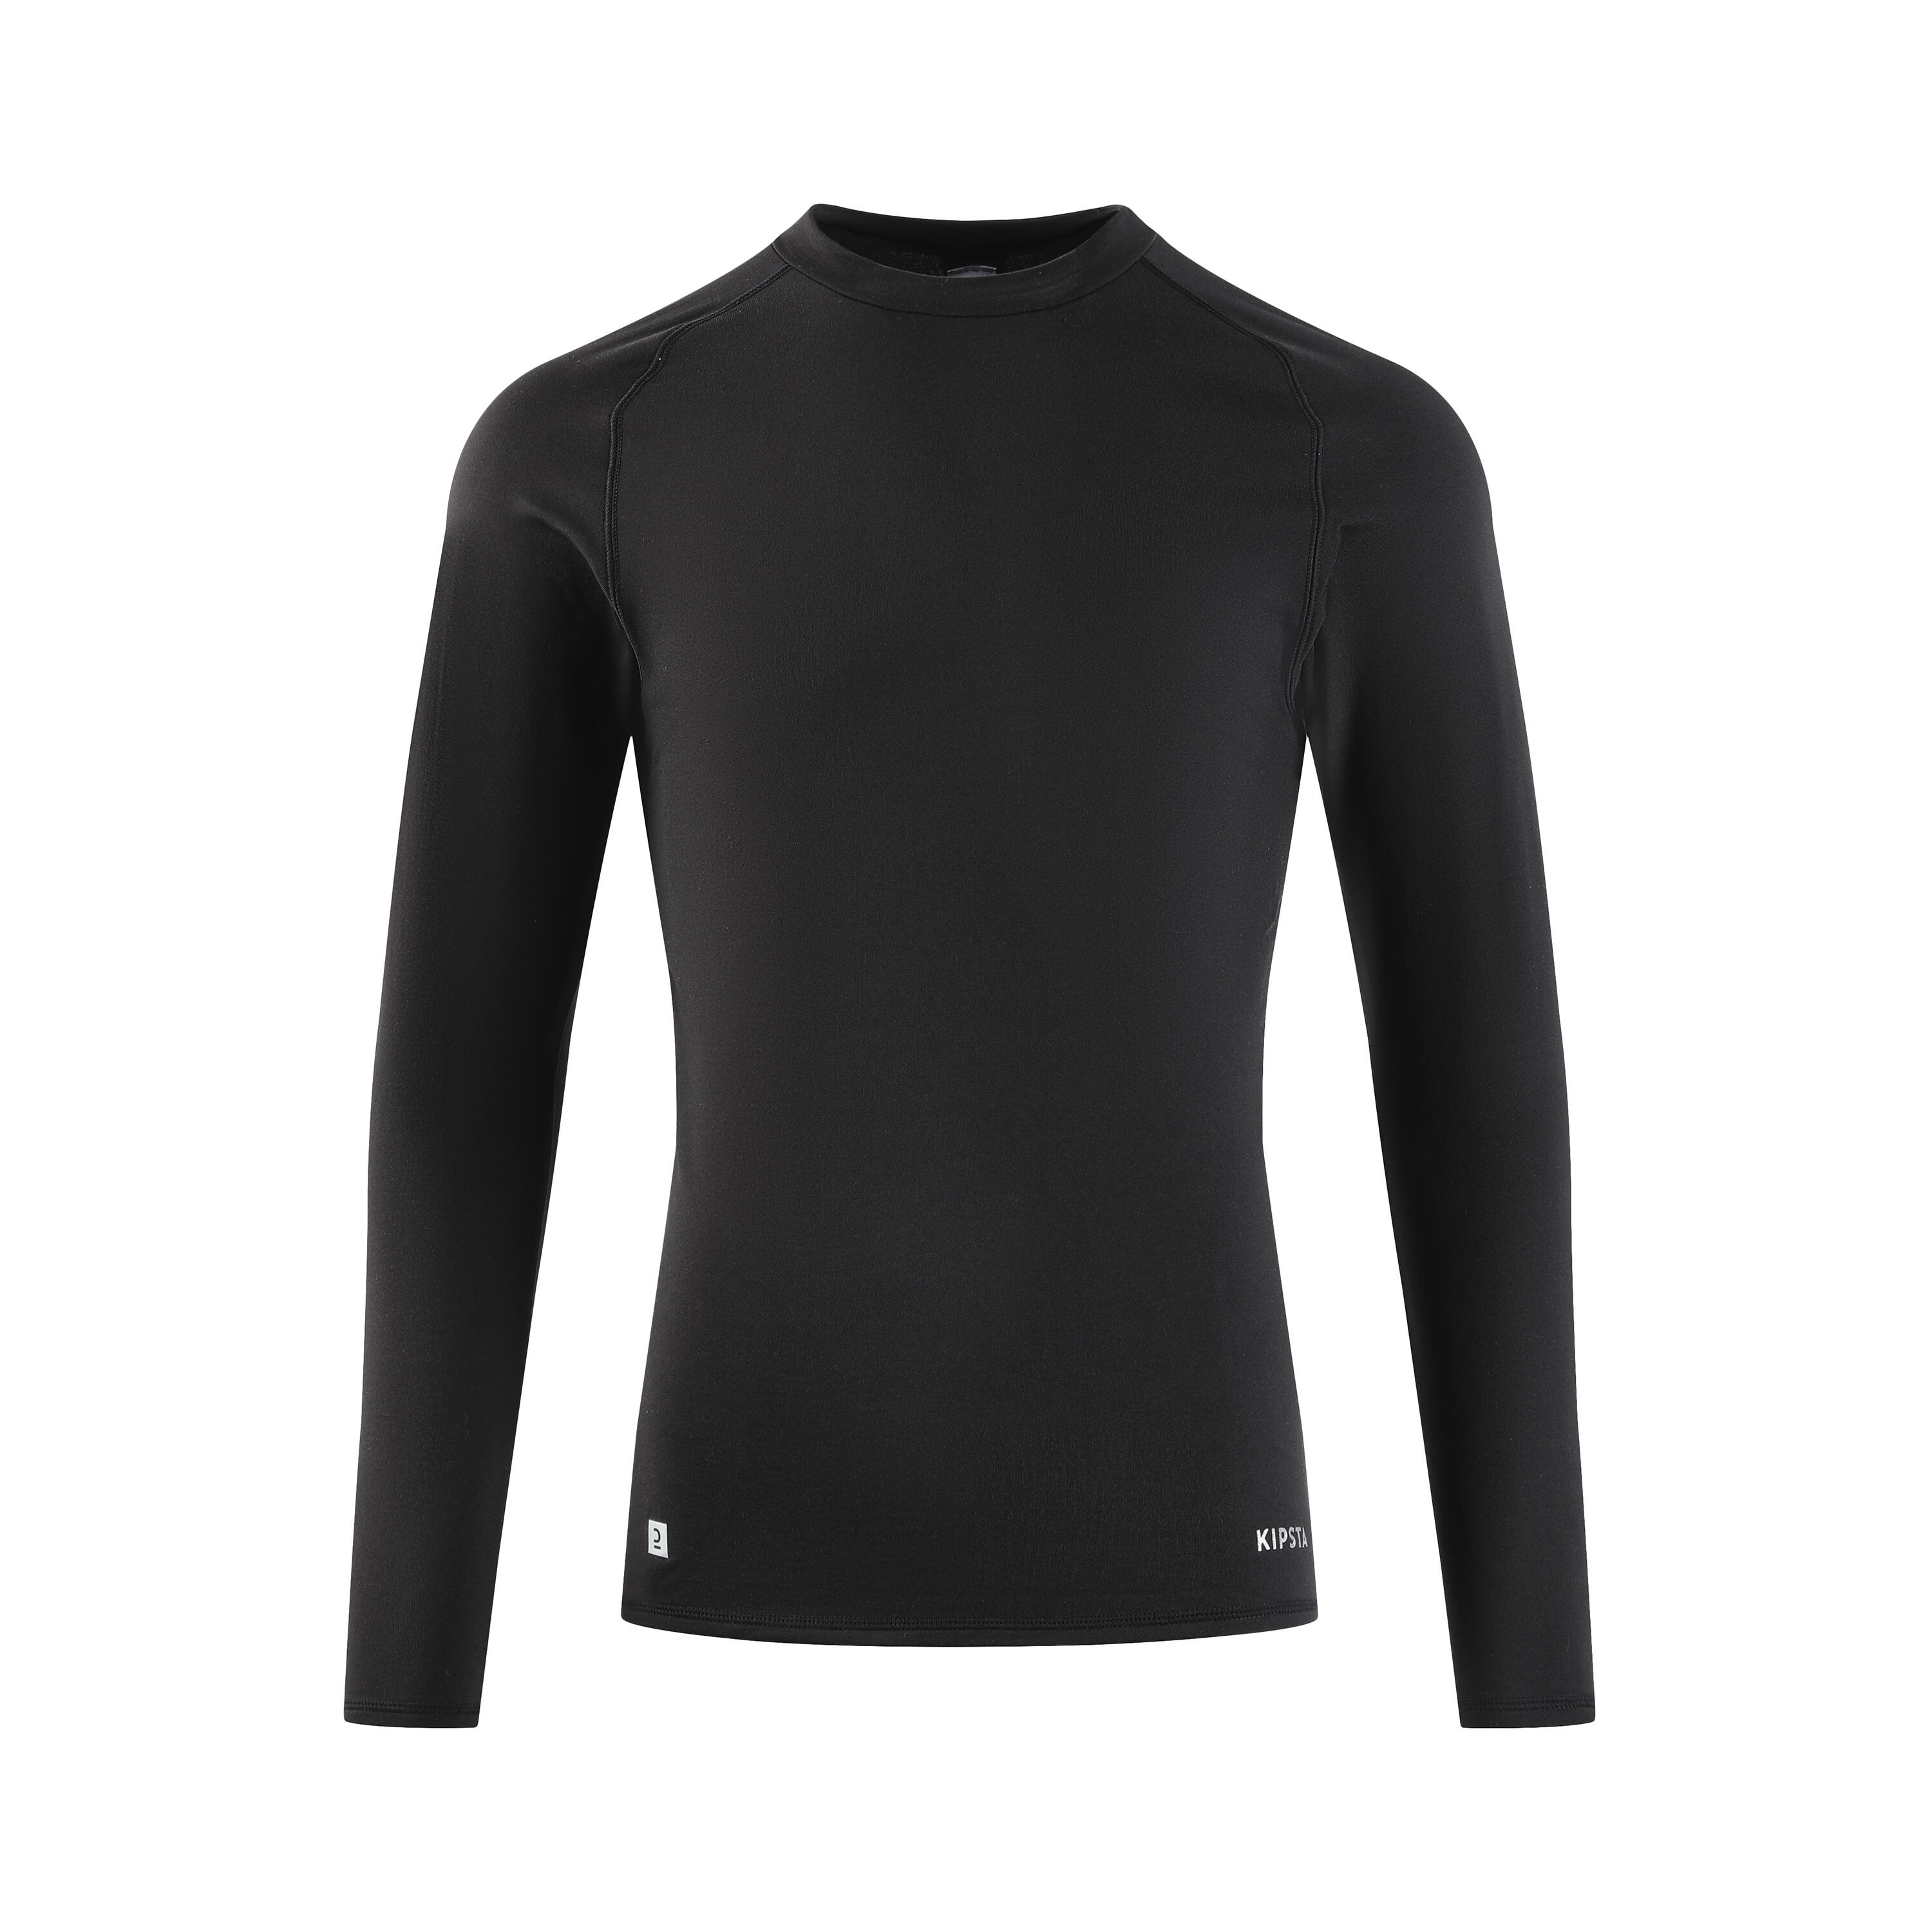 Men's Soccer Long-Sleeved Thermal Base Layer Top Keepcomfort 100 - Black -  Black - Kipsta - Decathlon